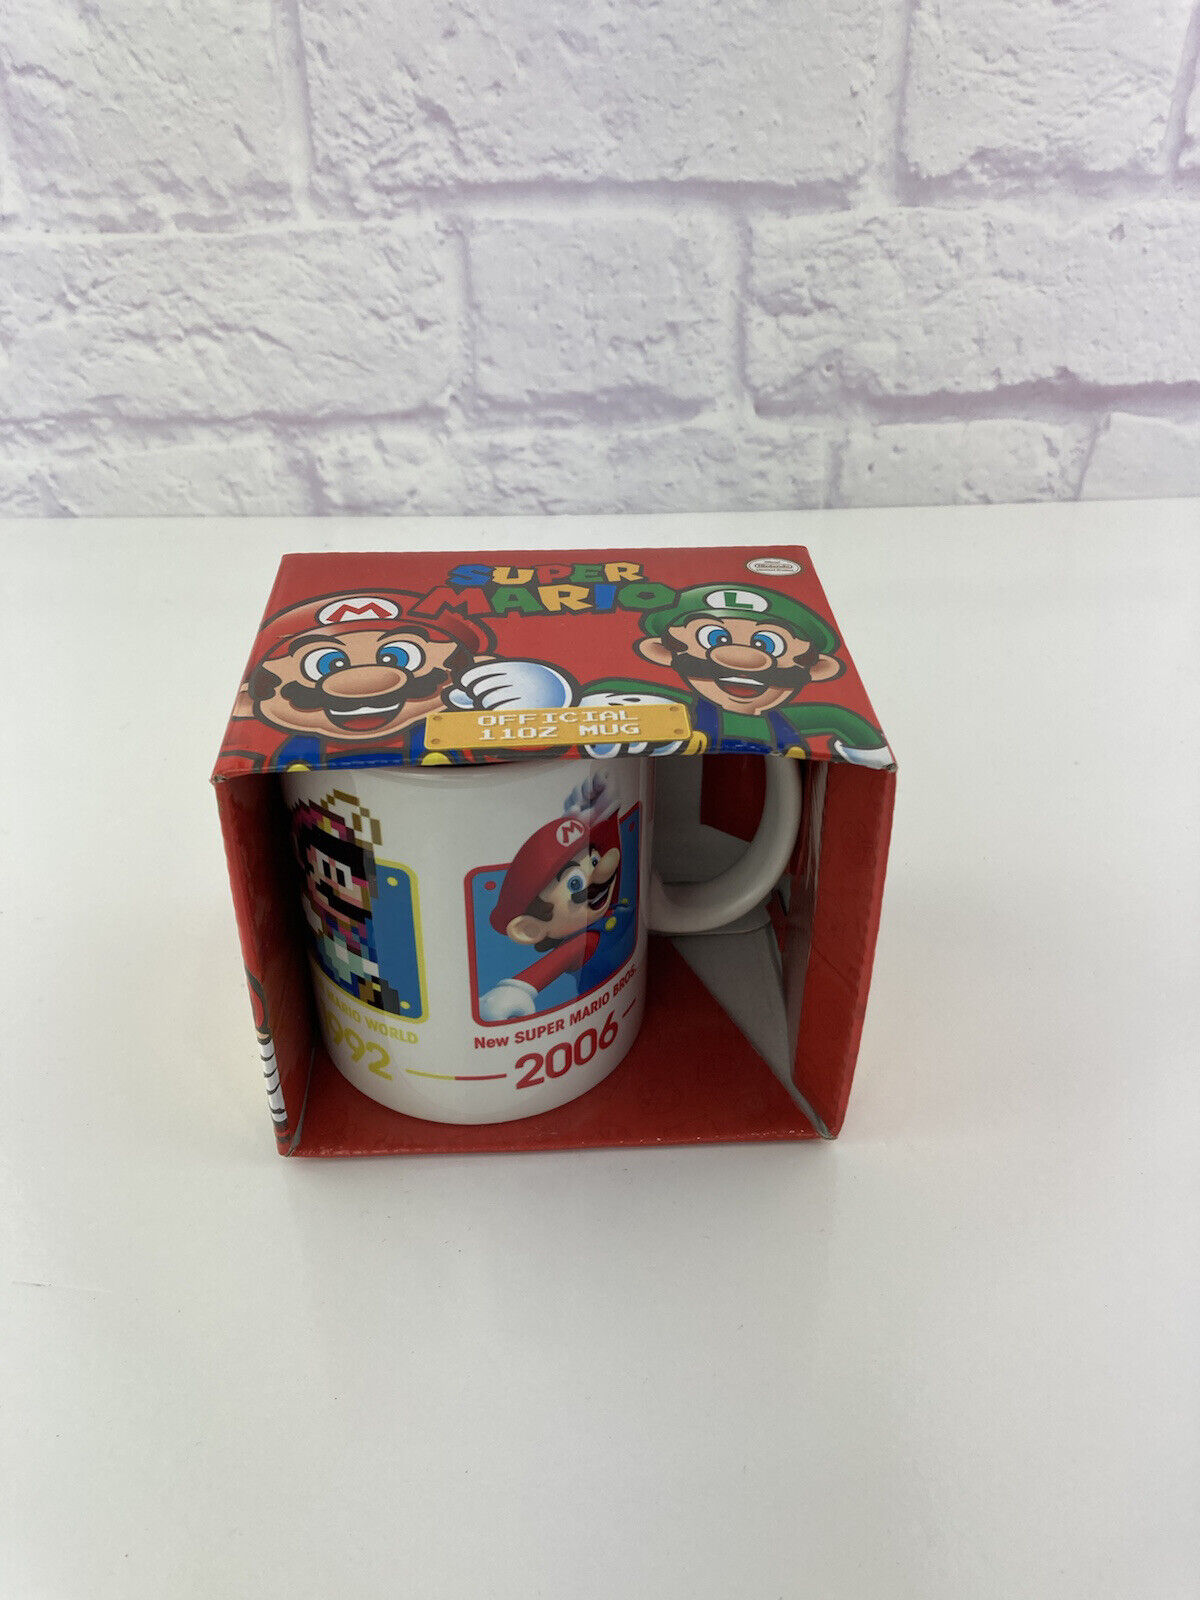 2018 Super Mario Bros. 11 oz. Mug, Stocking stuffer gift for coffee drinkers